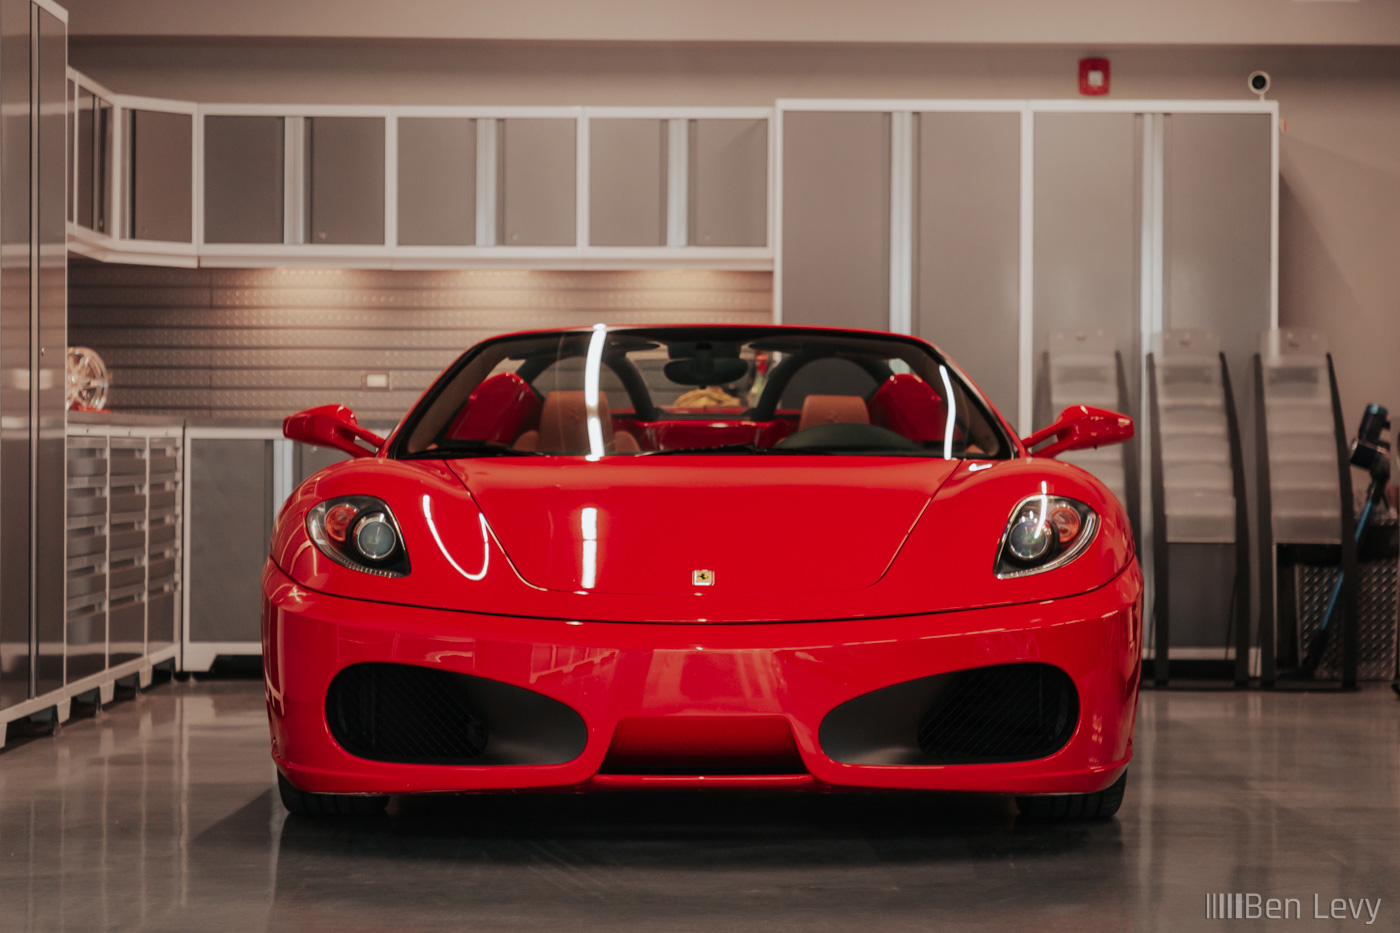 Red Ferrari F430 Spider in a Clean Garage